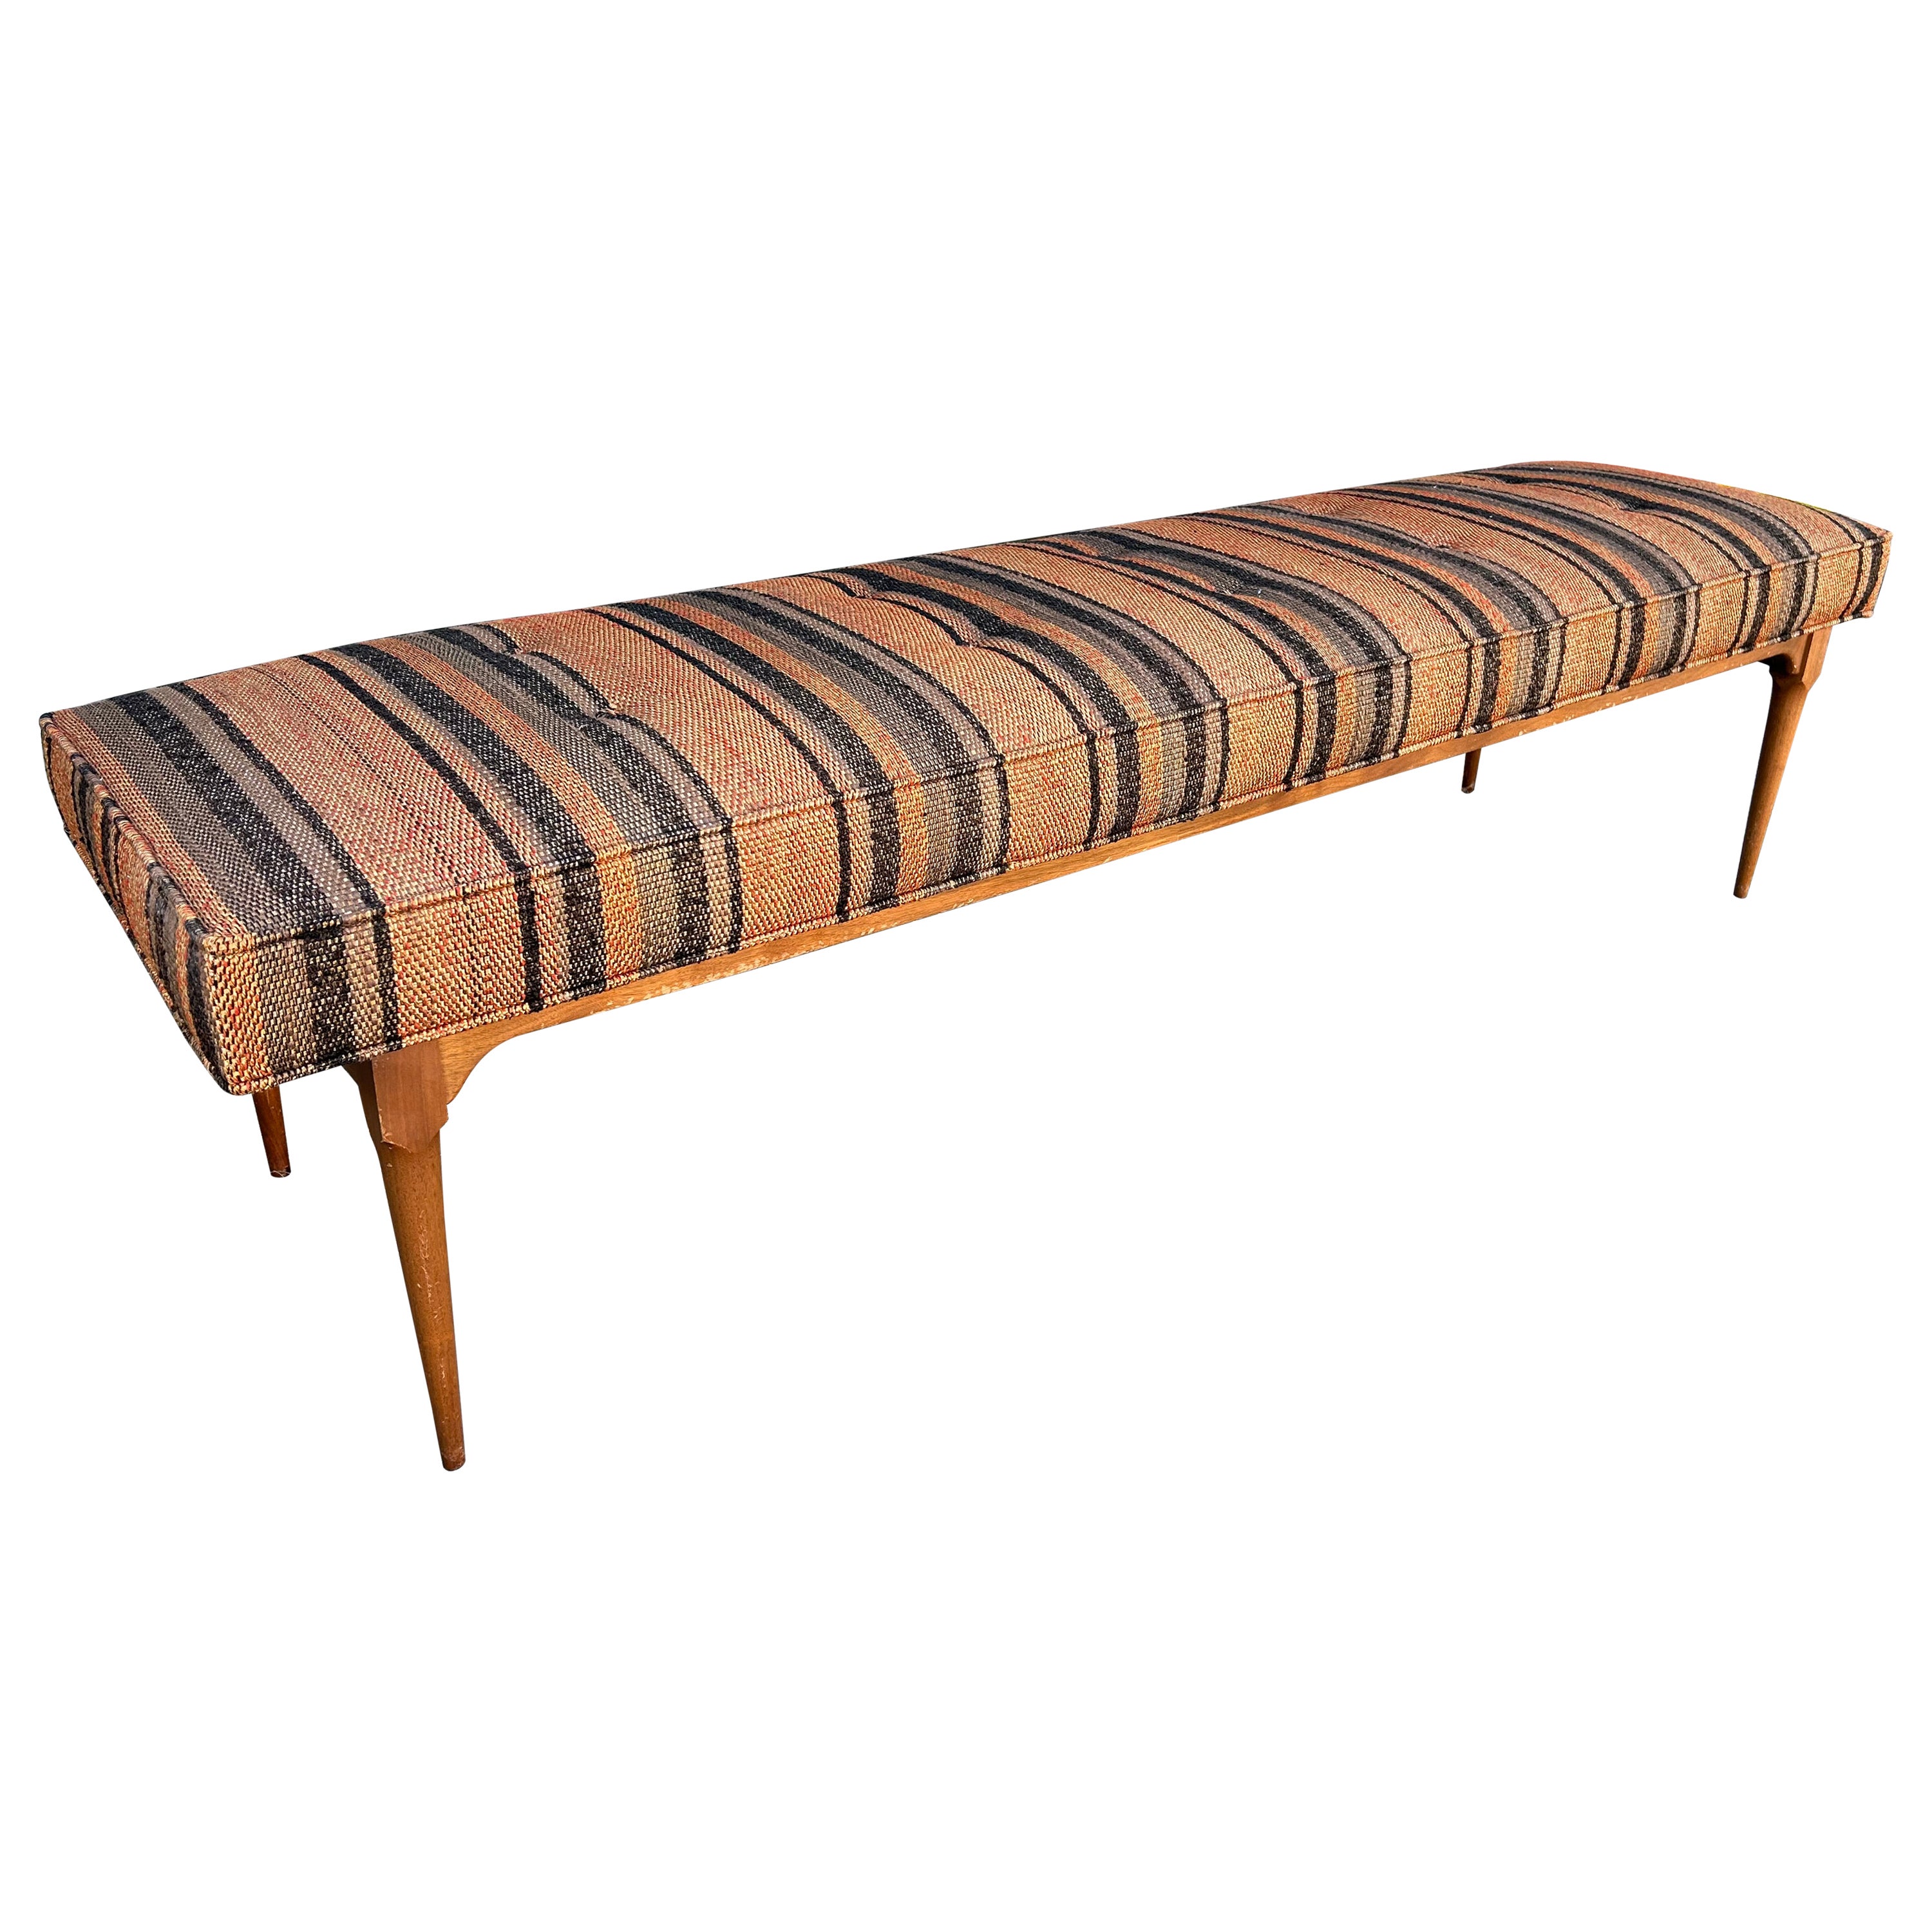 Handsome X-Long Bench Harvey Probber style Walnut Mid-Century Modern 